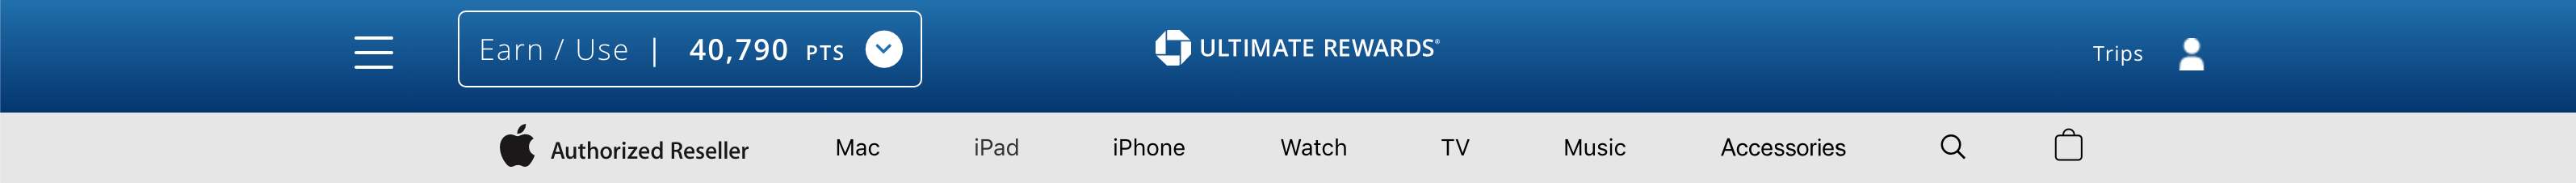 chase ultimate rewards portal